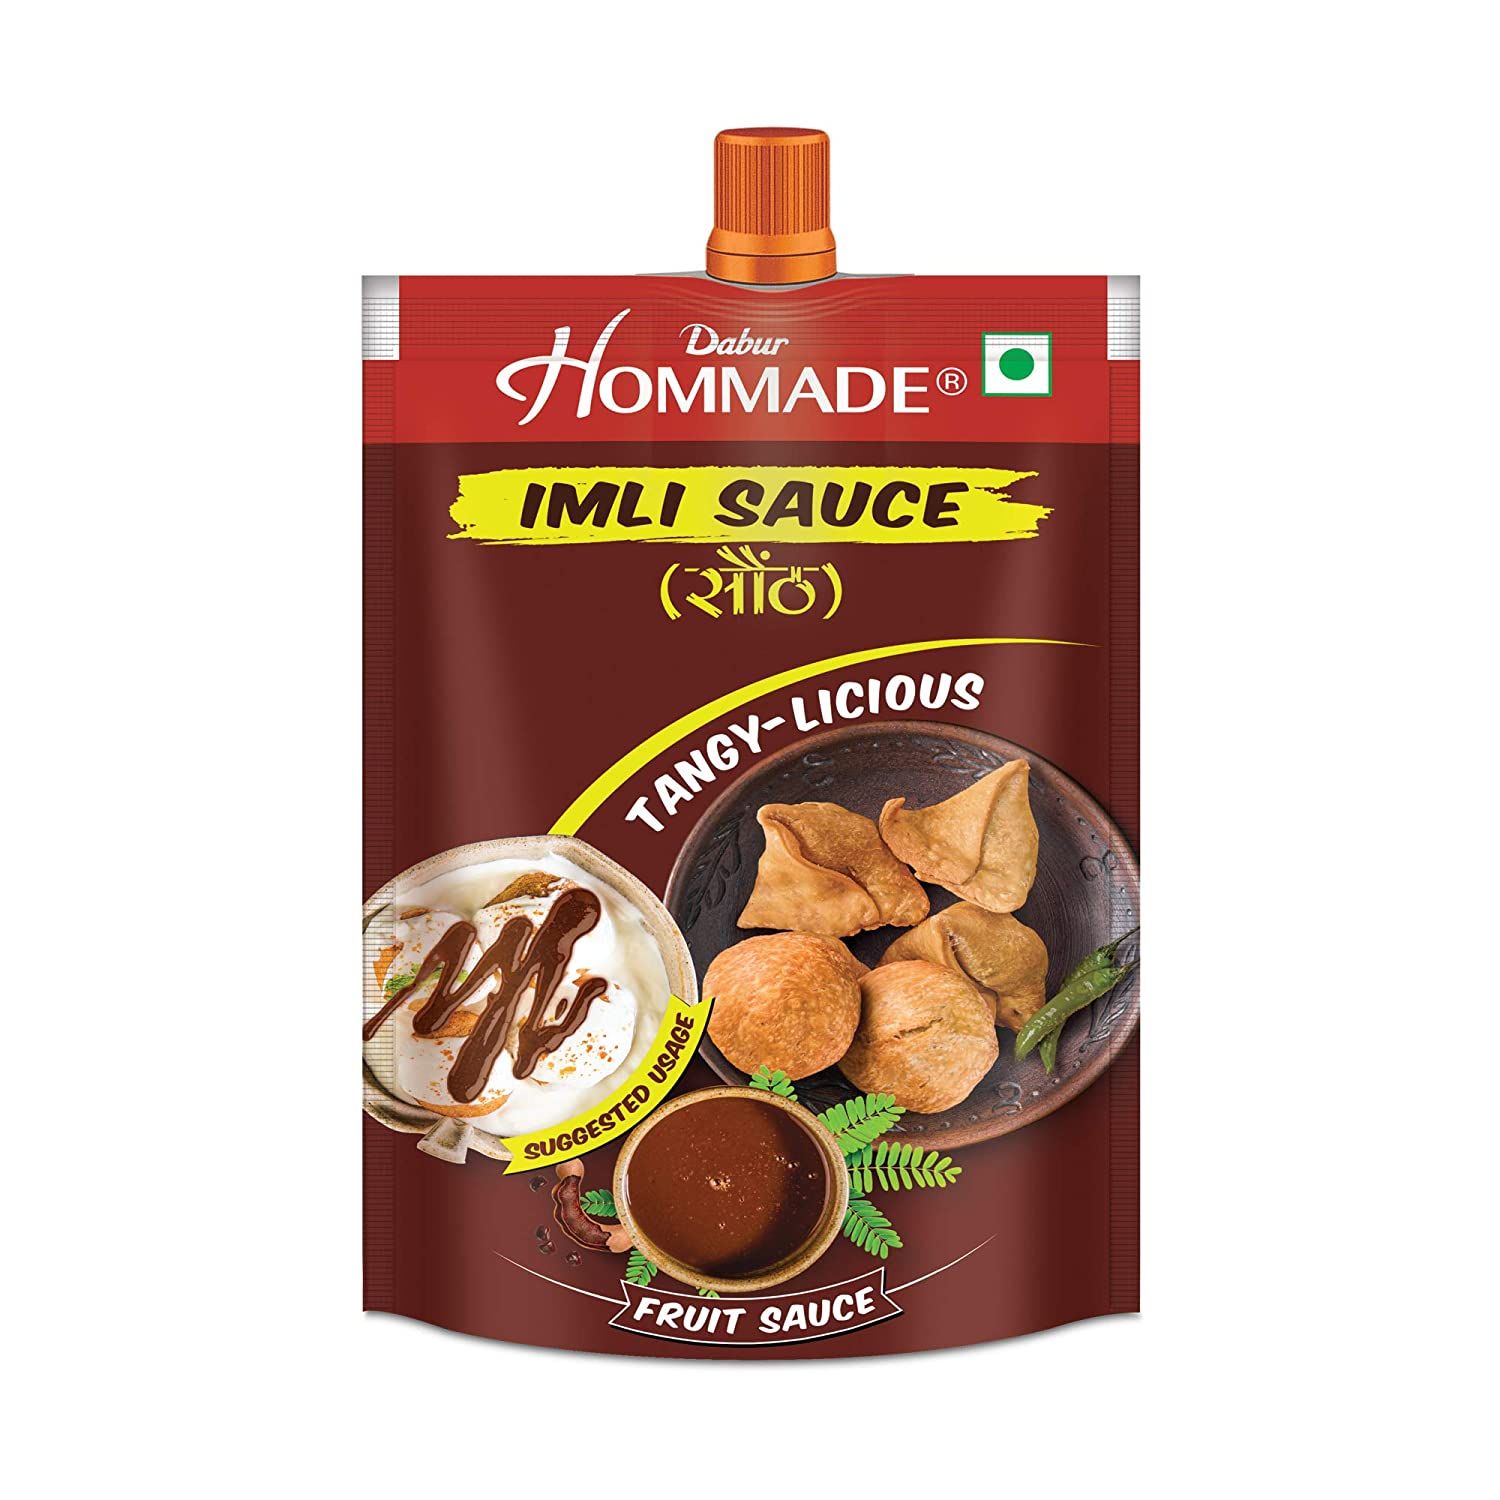 Dabur Hommade Imli Sauce Image